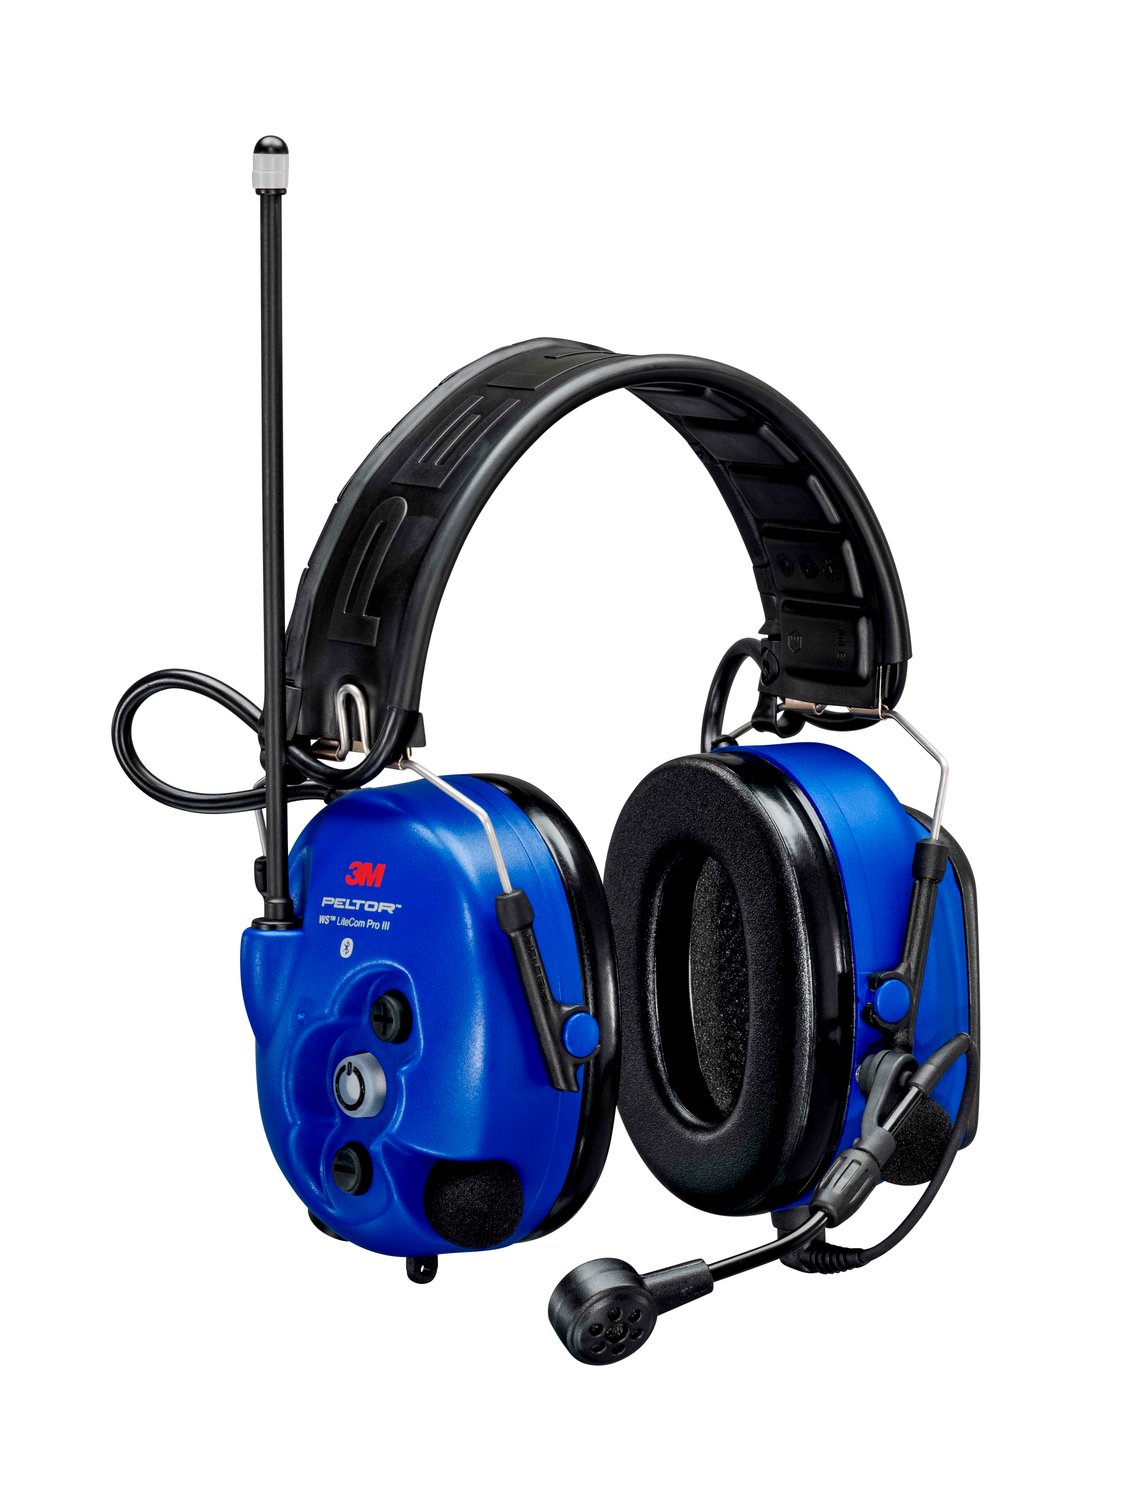 7100099585 - 3M PELTOR WS LiteCom PRO III Headset - Headband - Intrinsically Safe
- MT73H7F4D10NA-50